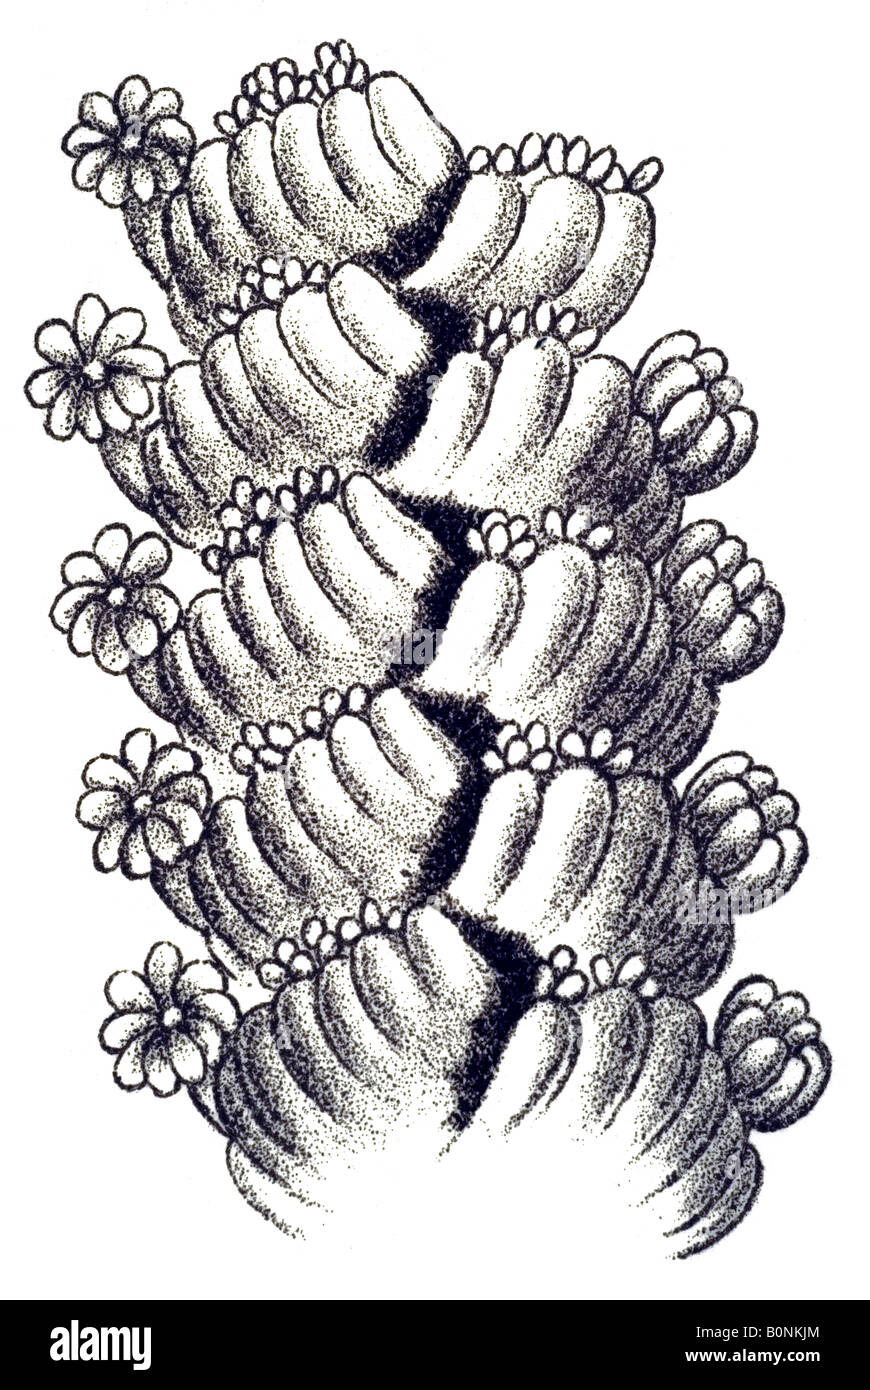 Pennatulida Federkorallen Virgularia glacialis, Nom, art nouveau d'Haeckel 20e siècle l'Europe Banque D'Images